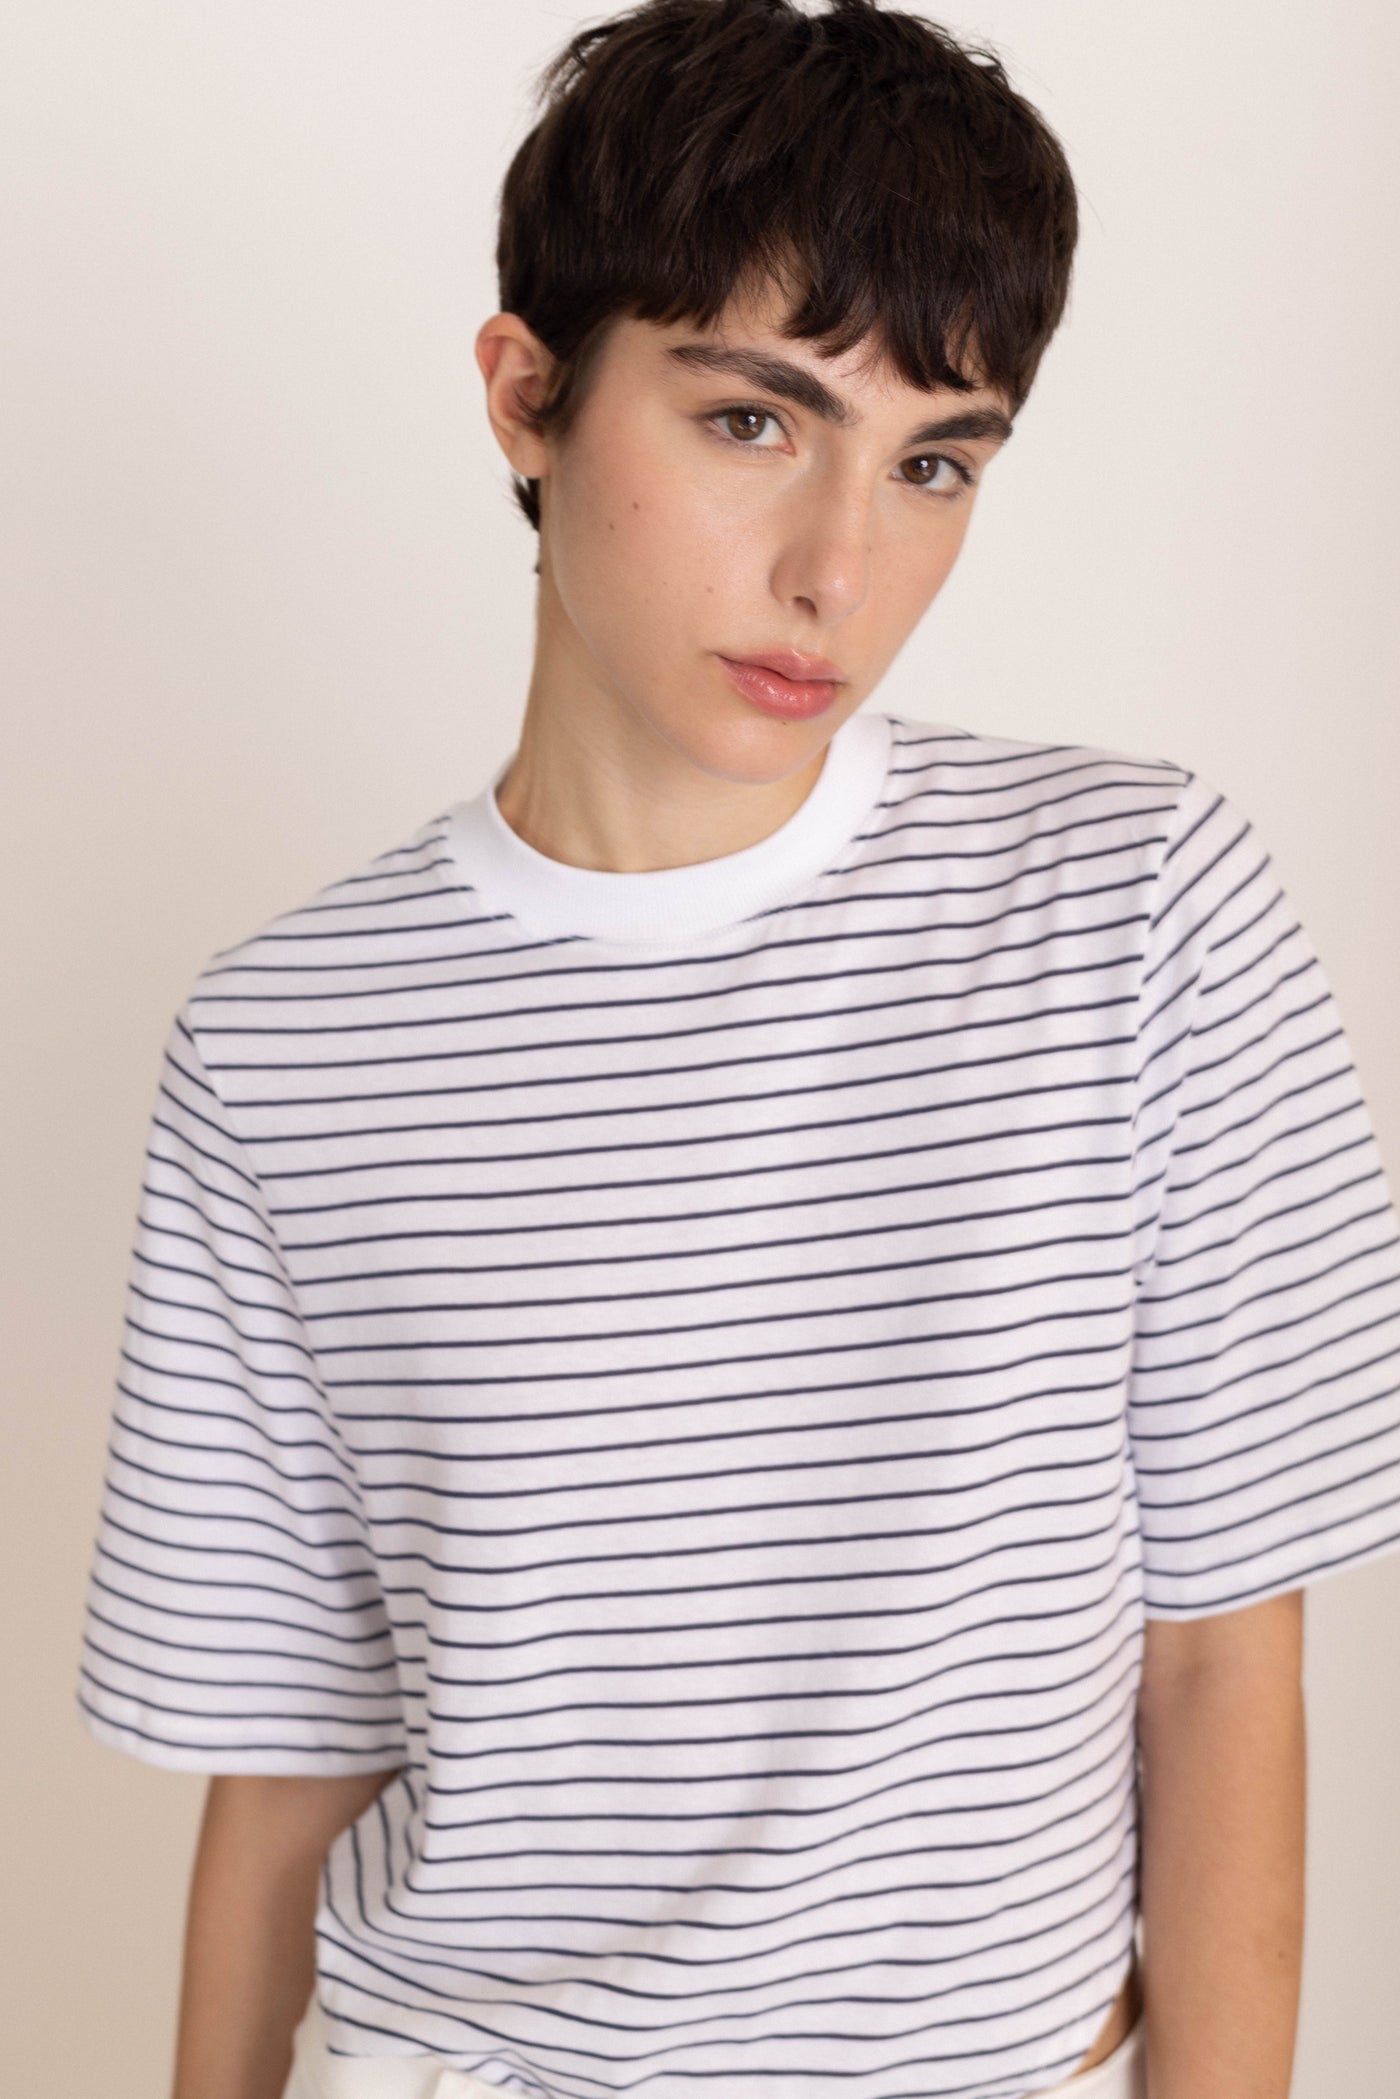 Franco T Shirt Bodysuit - Stripes